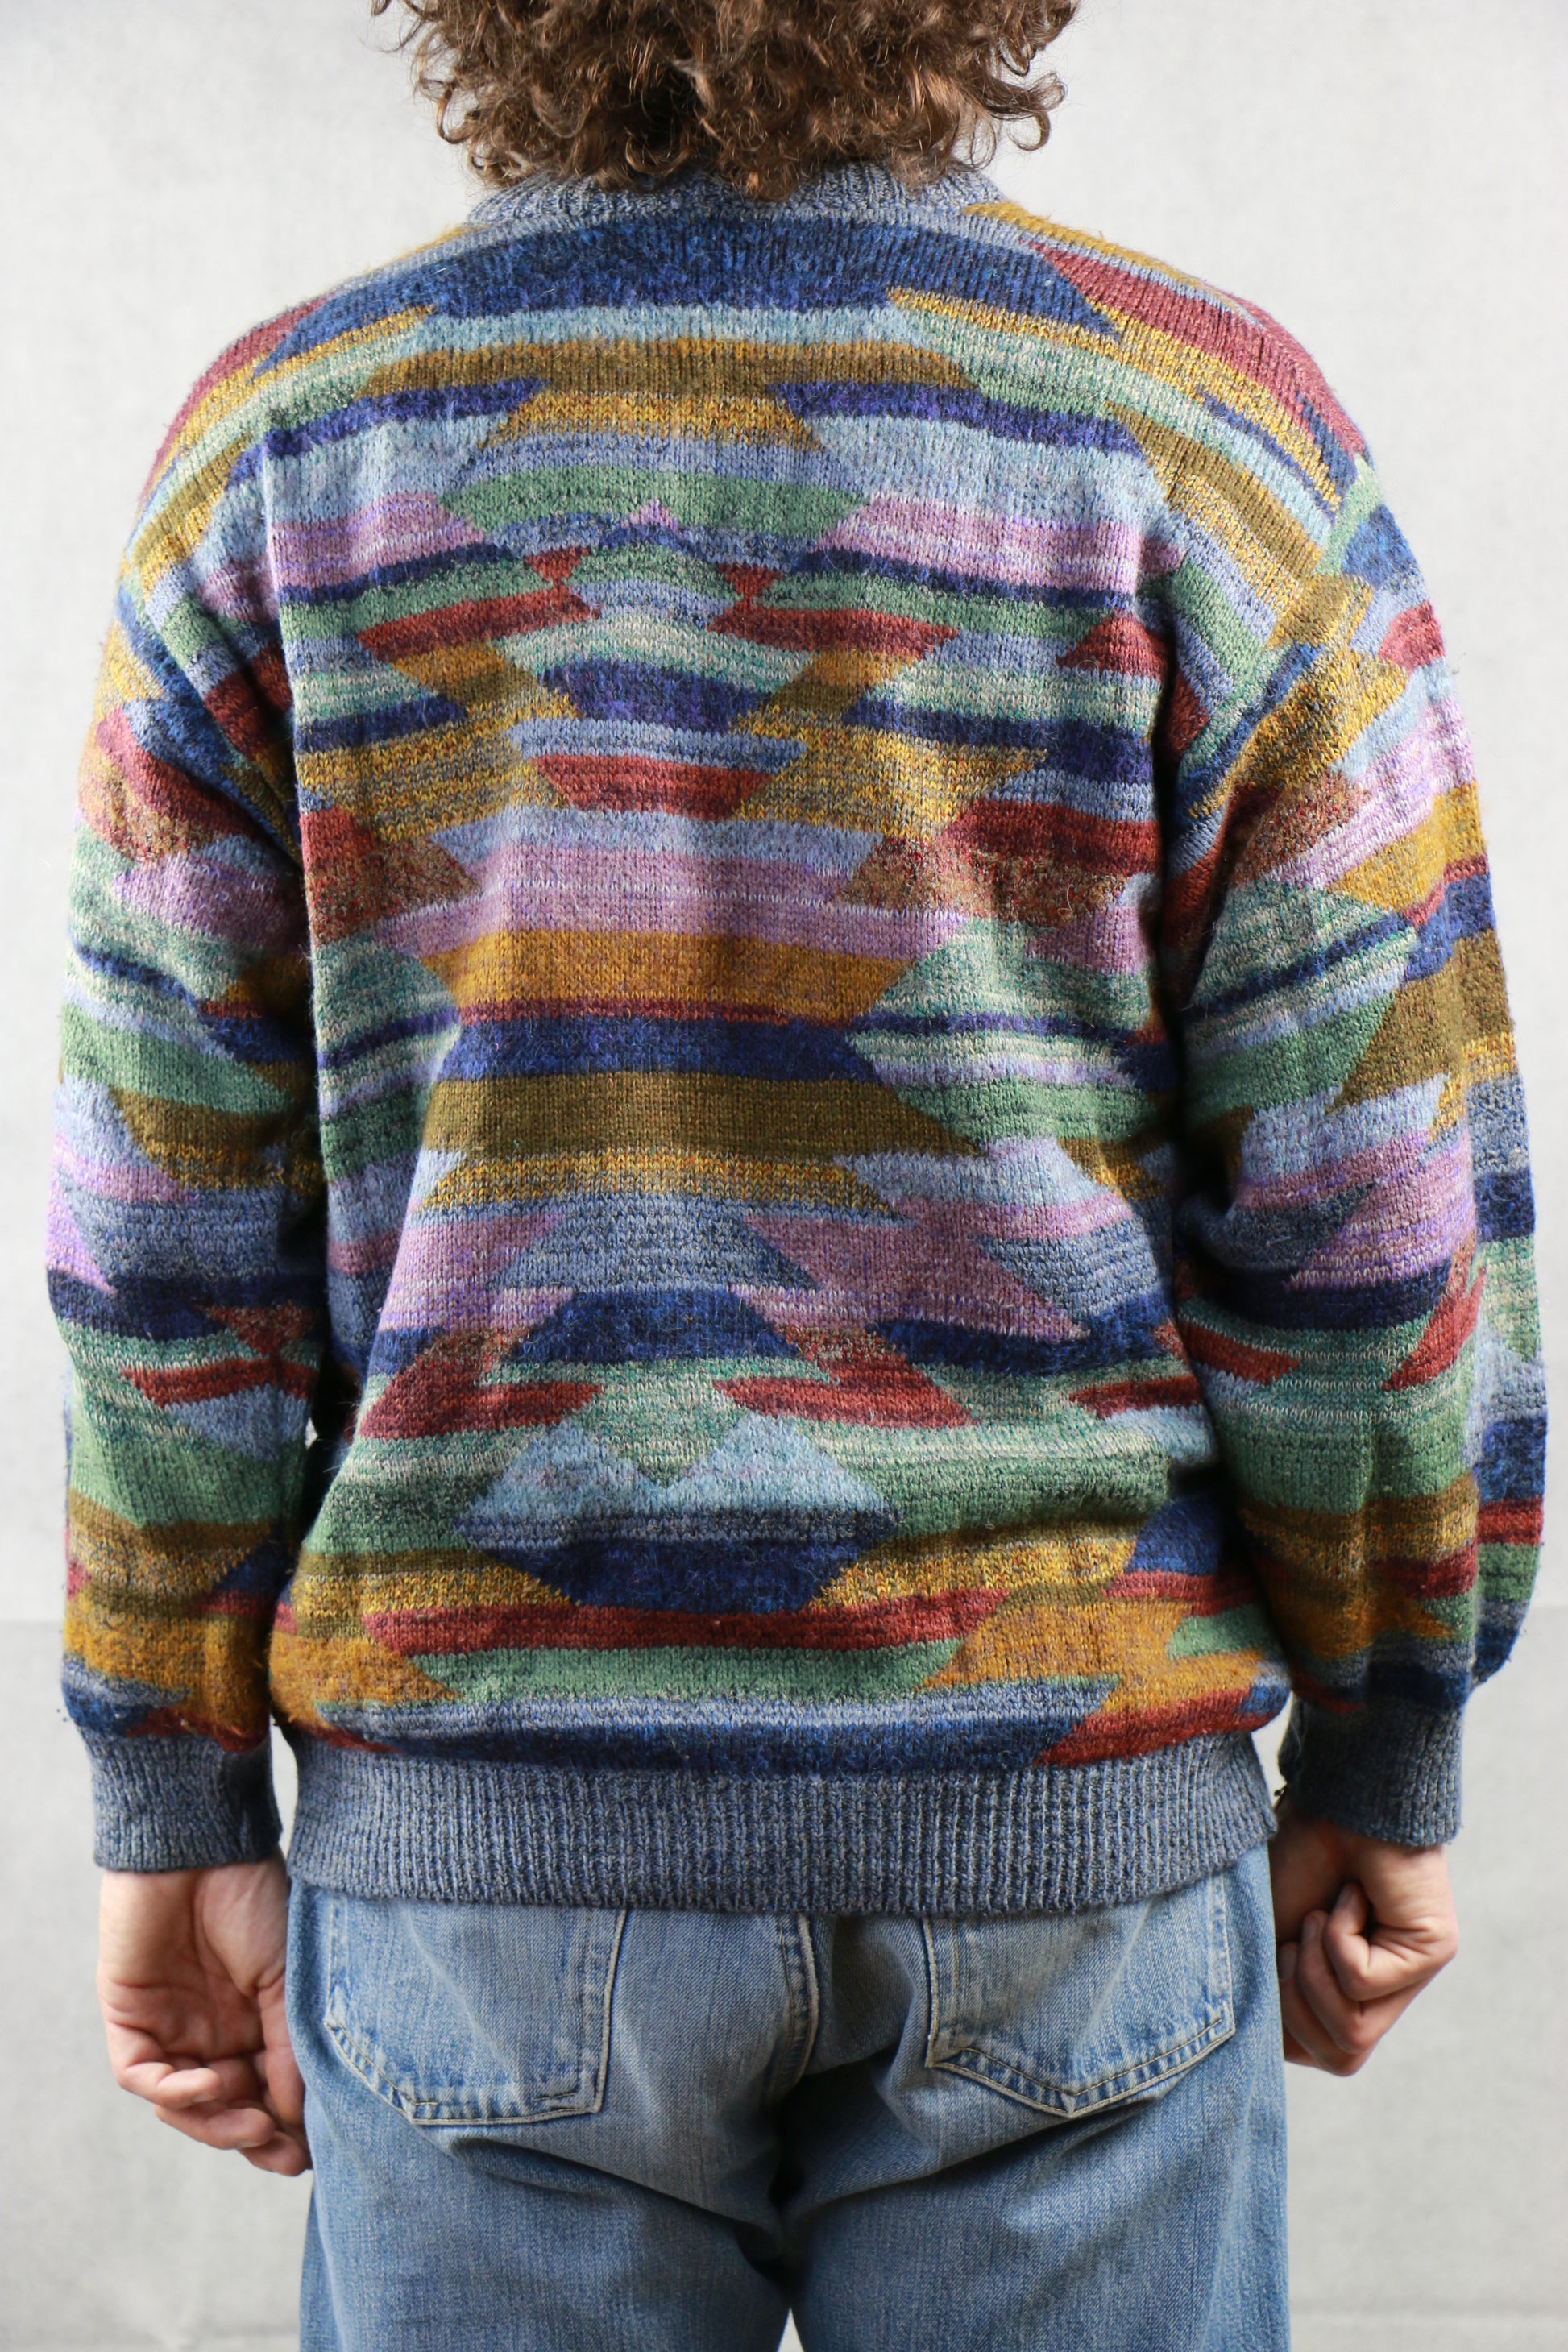 Missoni Sweater Abstract 'L', vintage store clochard92.com